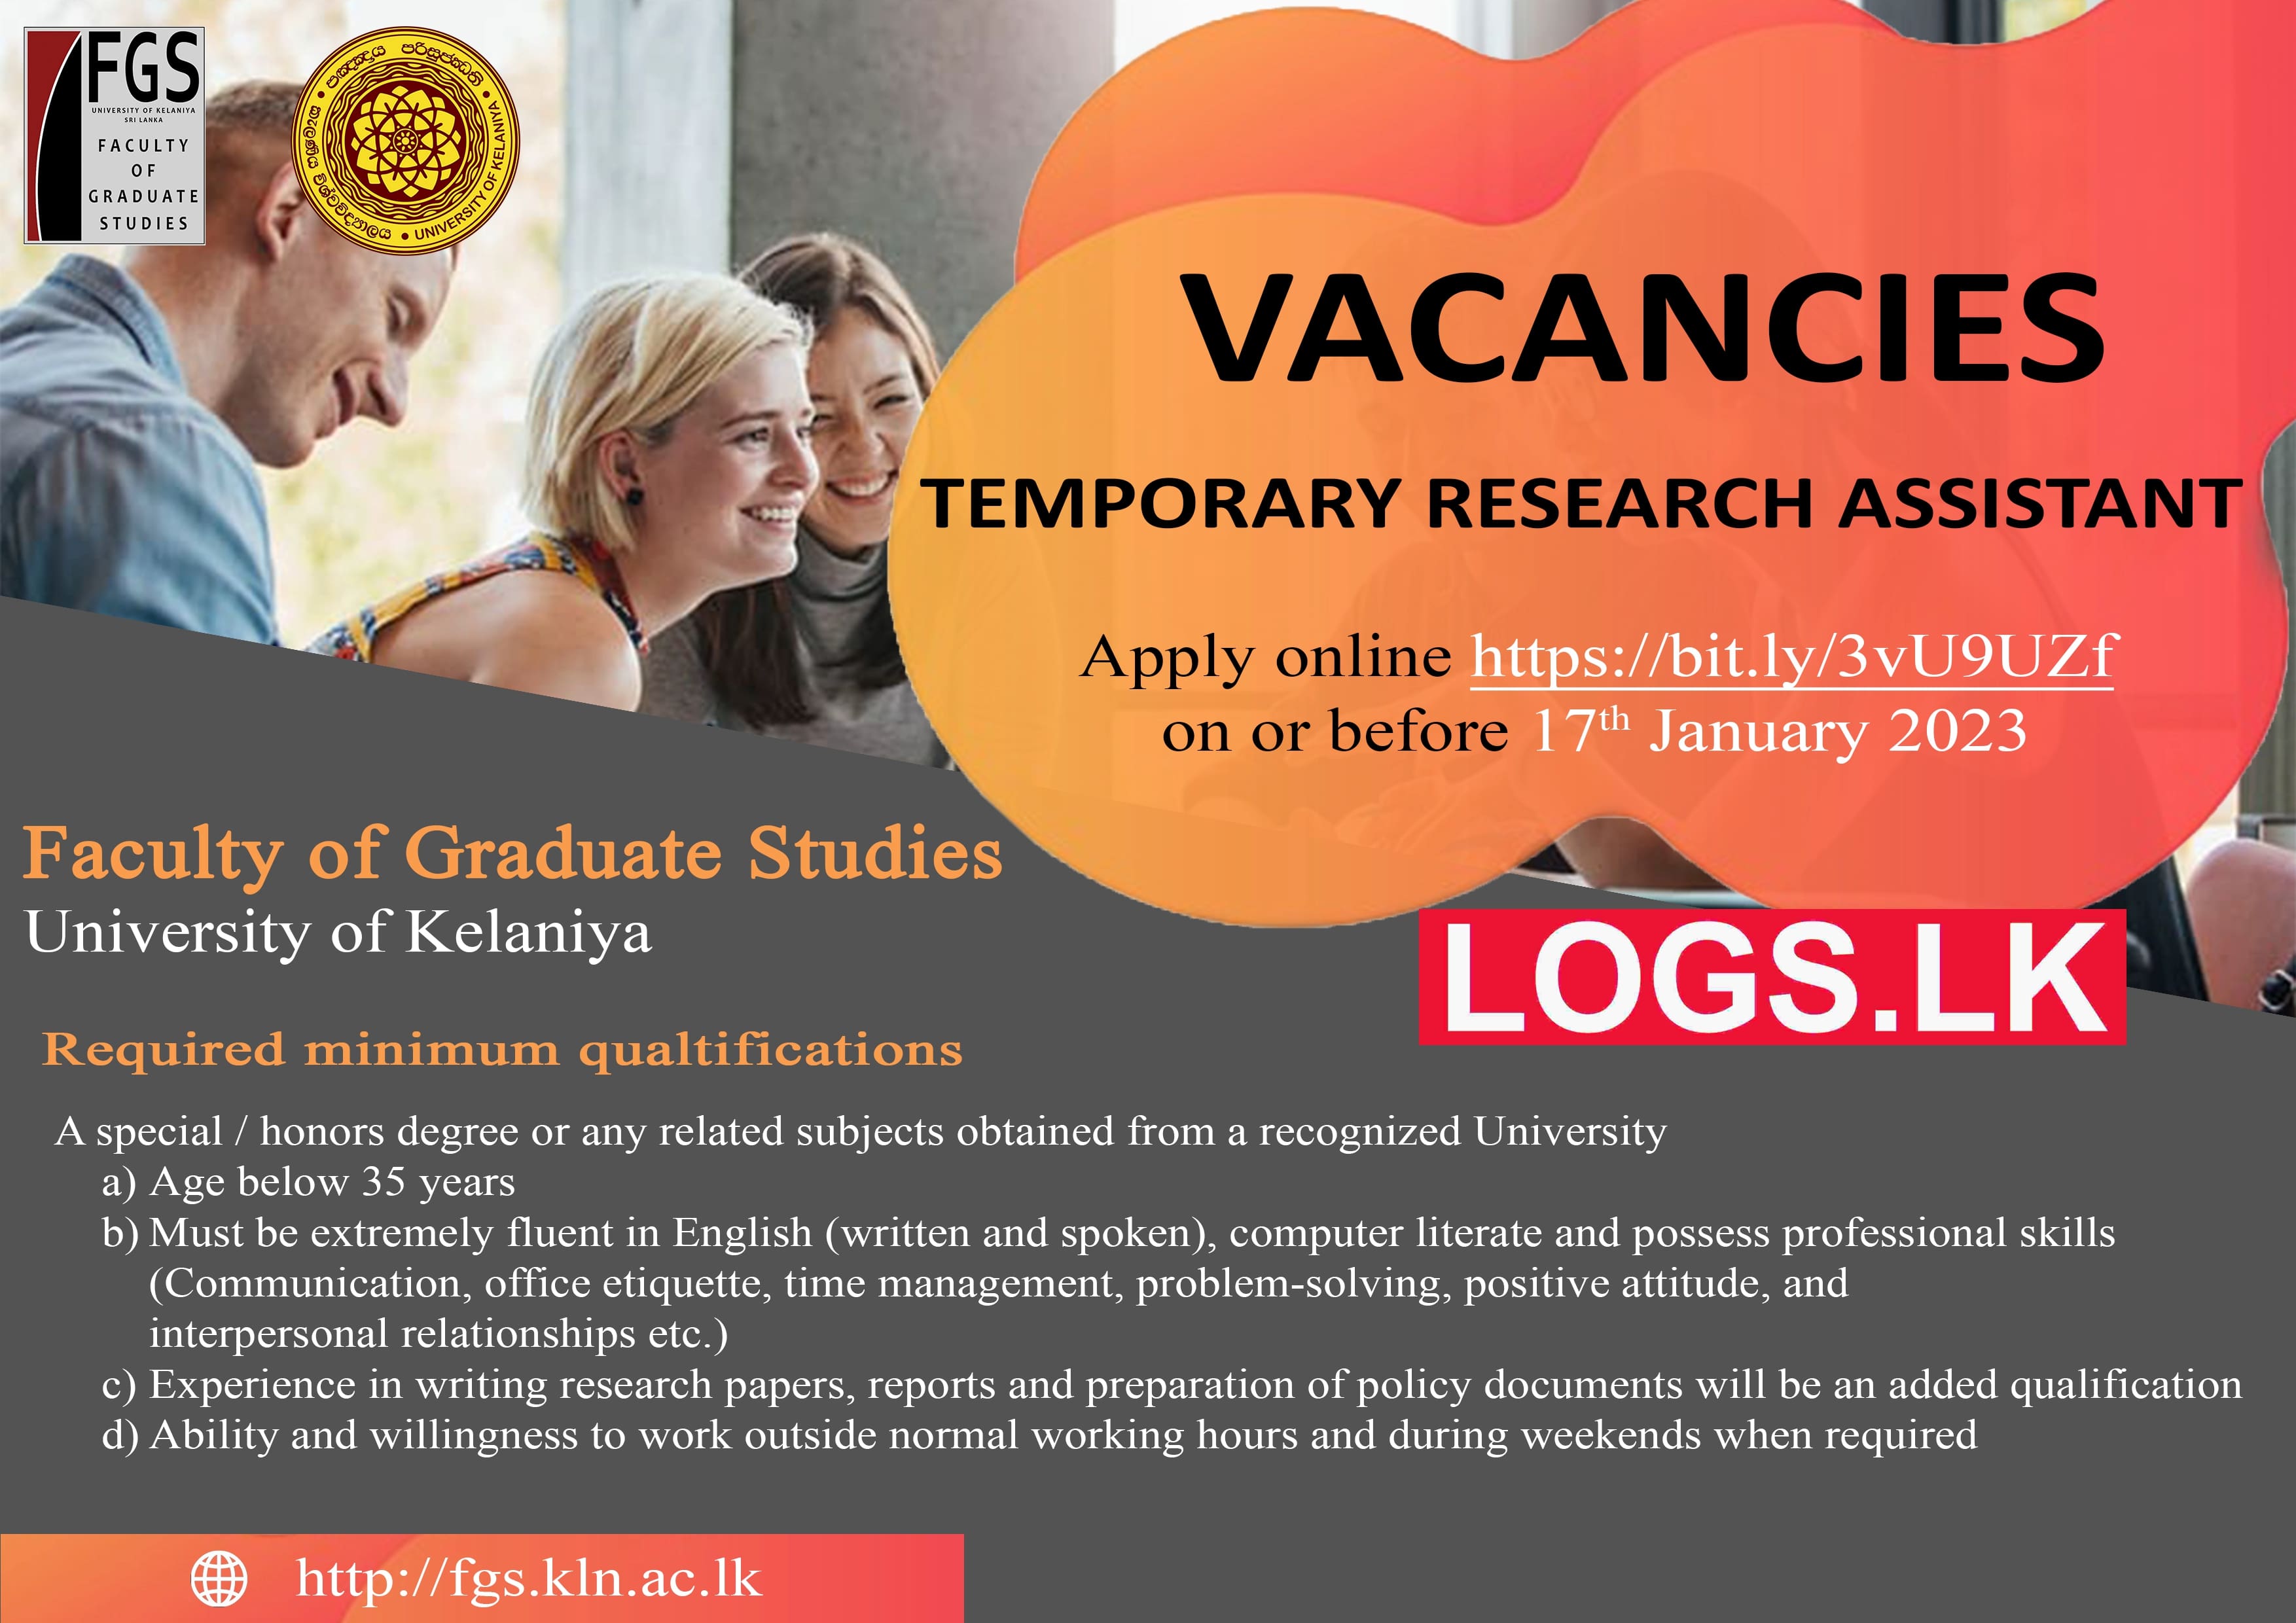 Temporary Research Assistant - University of Kelaniya Vacancies 2023 Apply Online